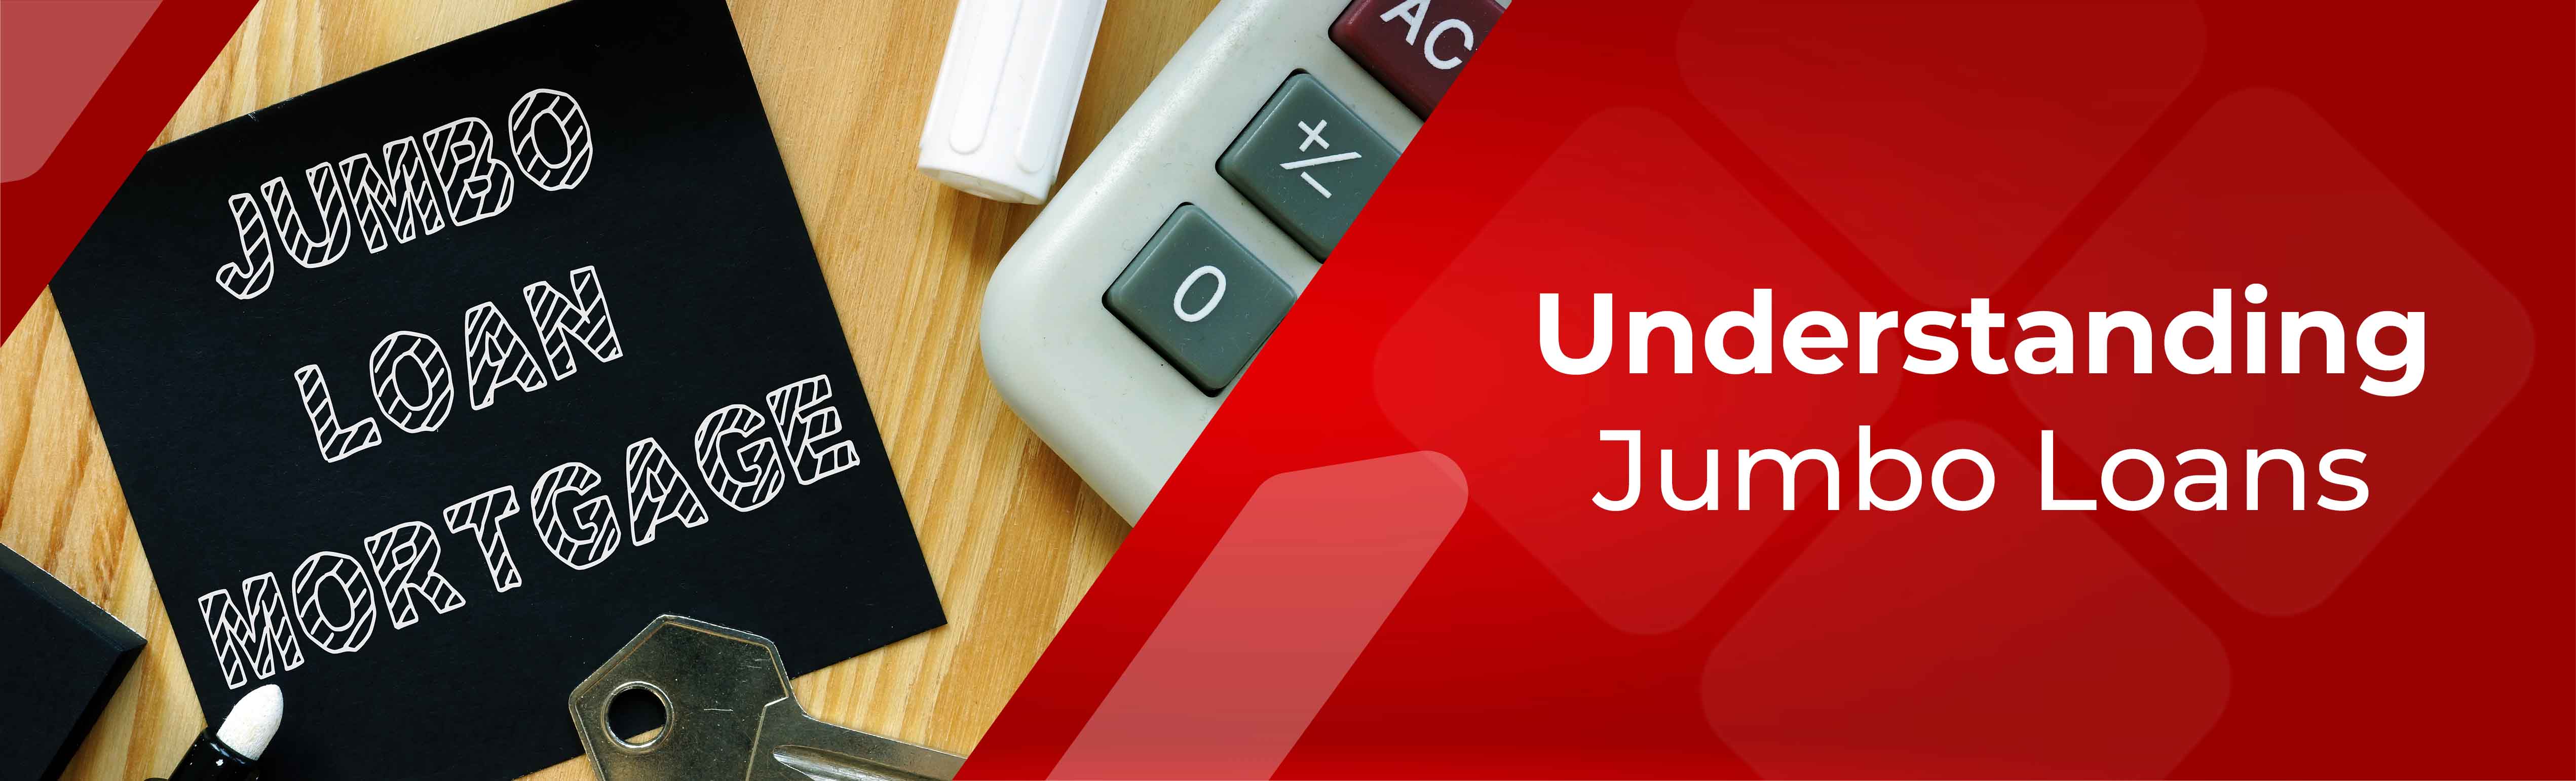 Understanding Jumbo Loans - calculator and note that says Jumbo Loan Mortgage